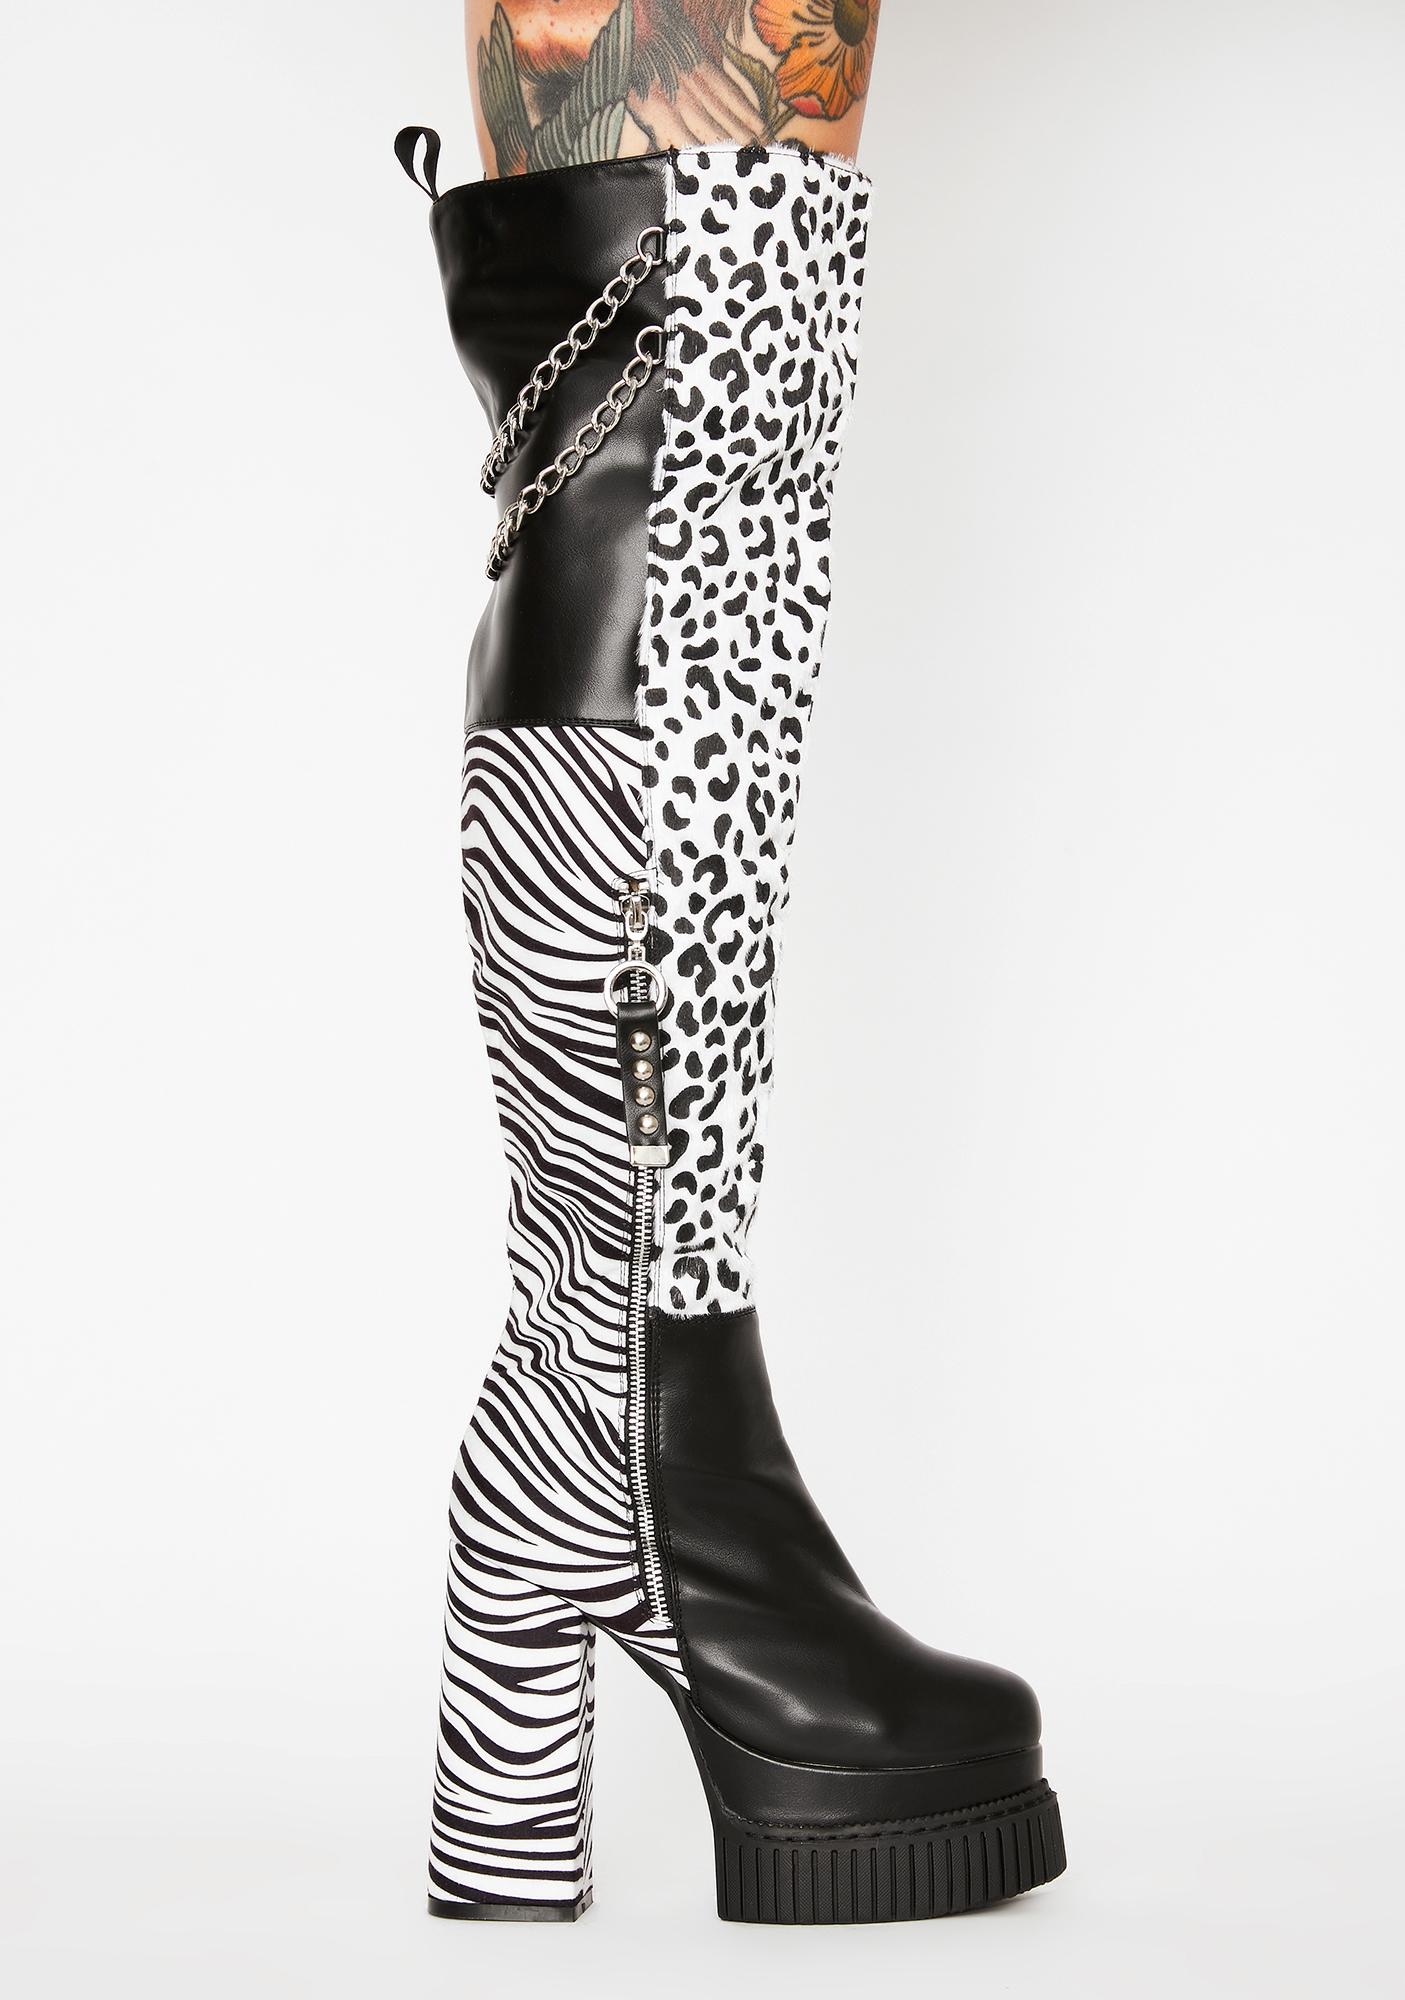 thigh high boots leopard print